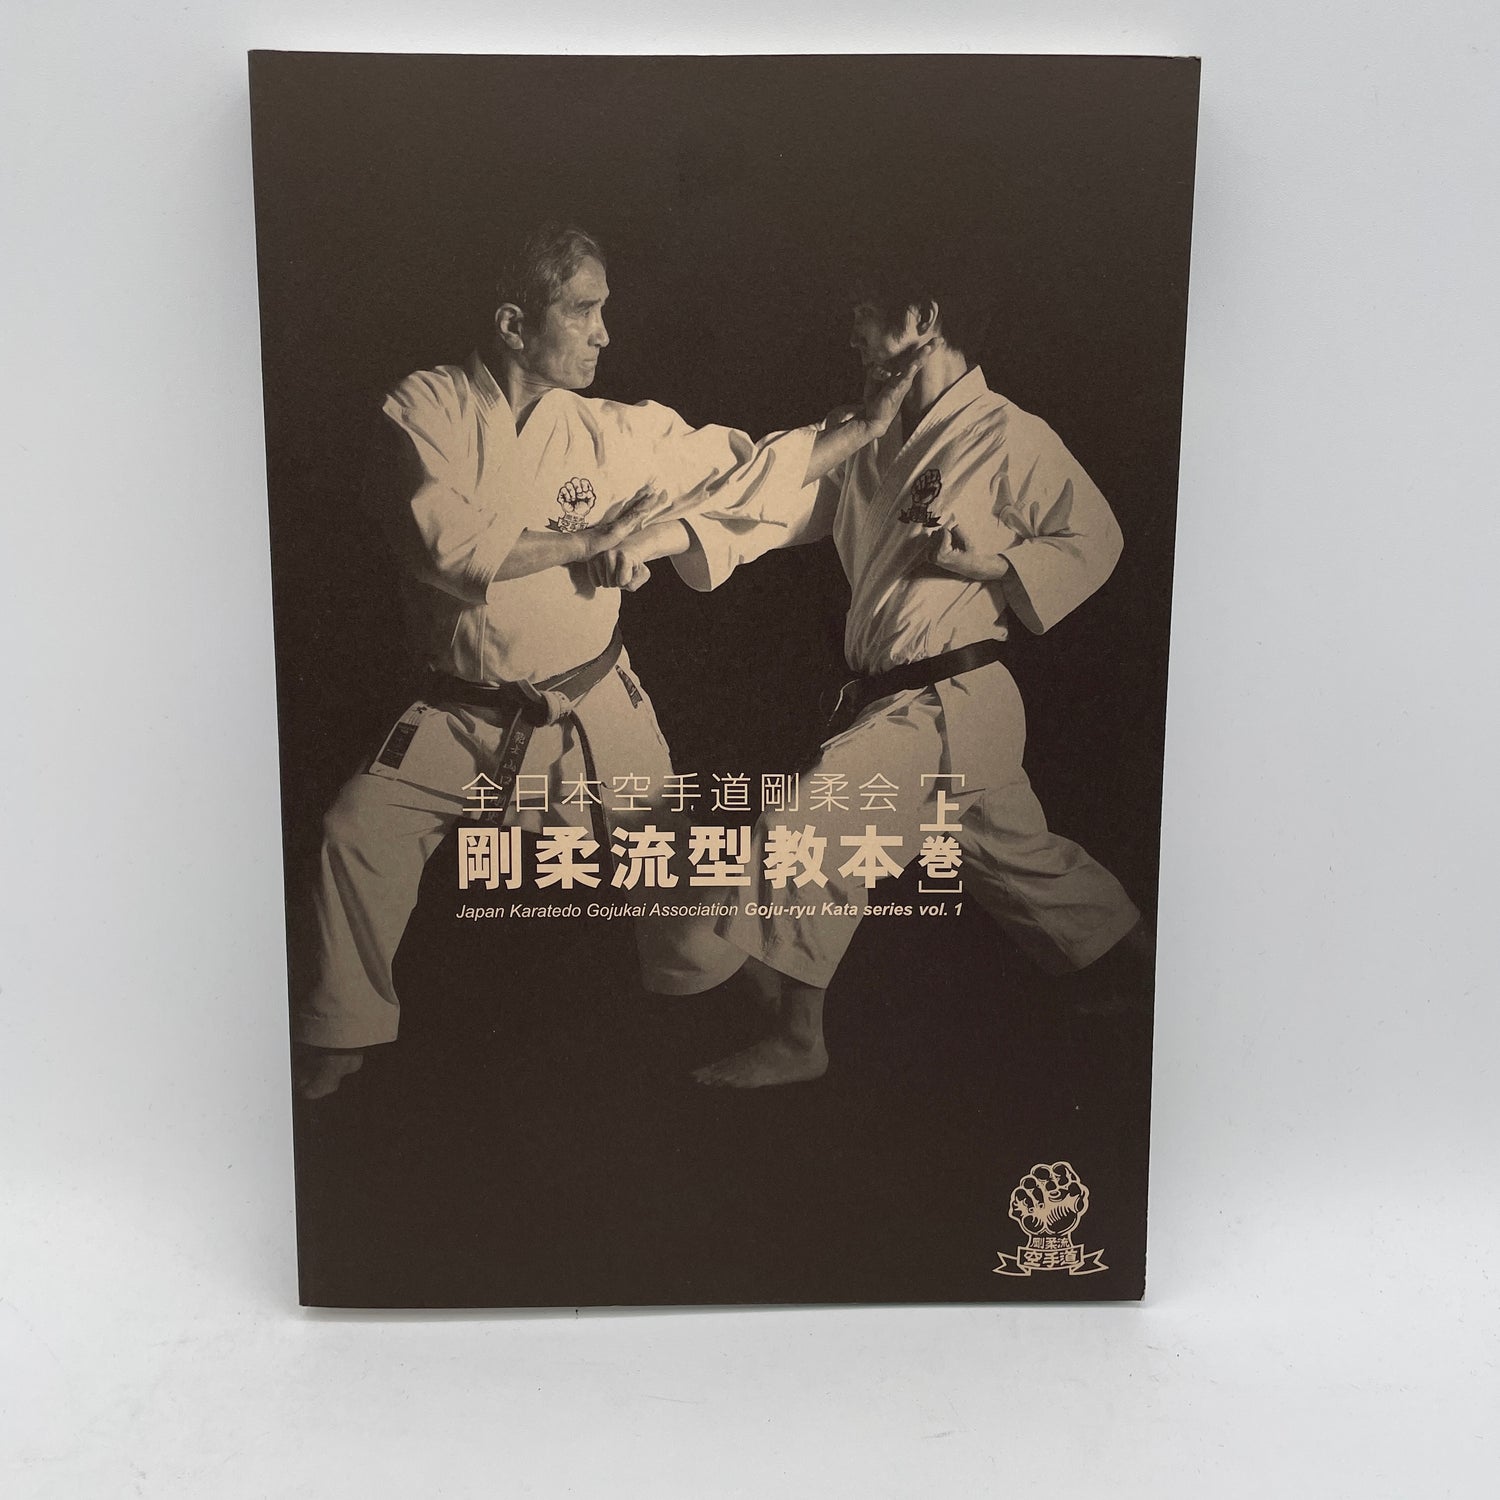 Serie Goju Ryu Kata Libro 1 de la Asociación Japonesa Karatedo Gojukai